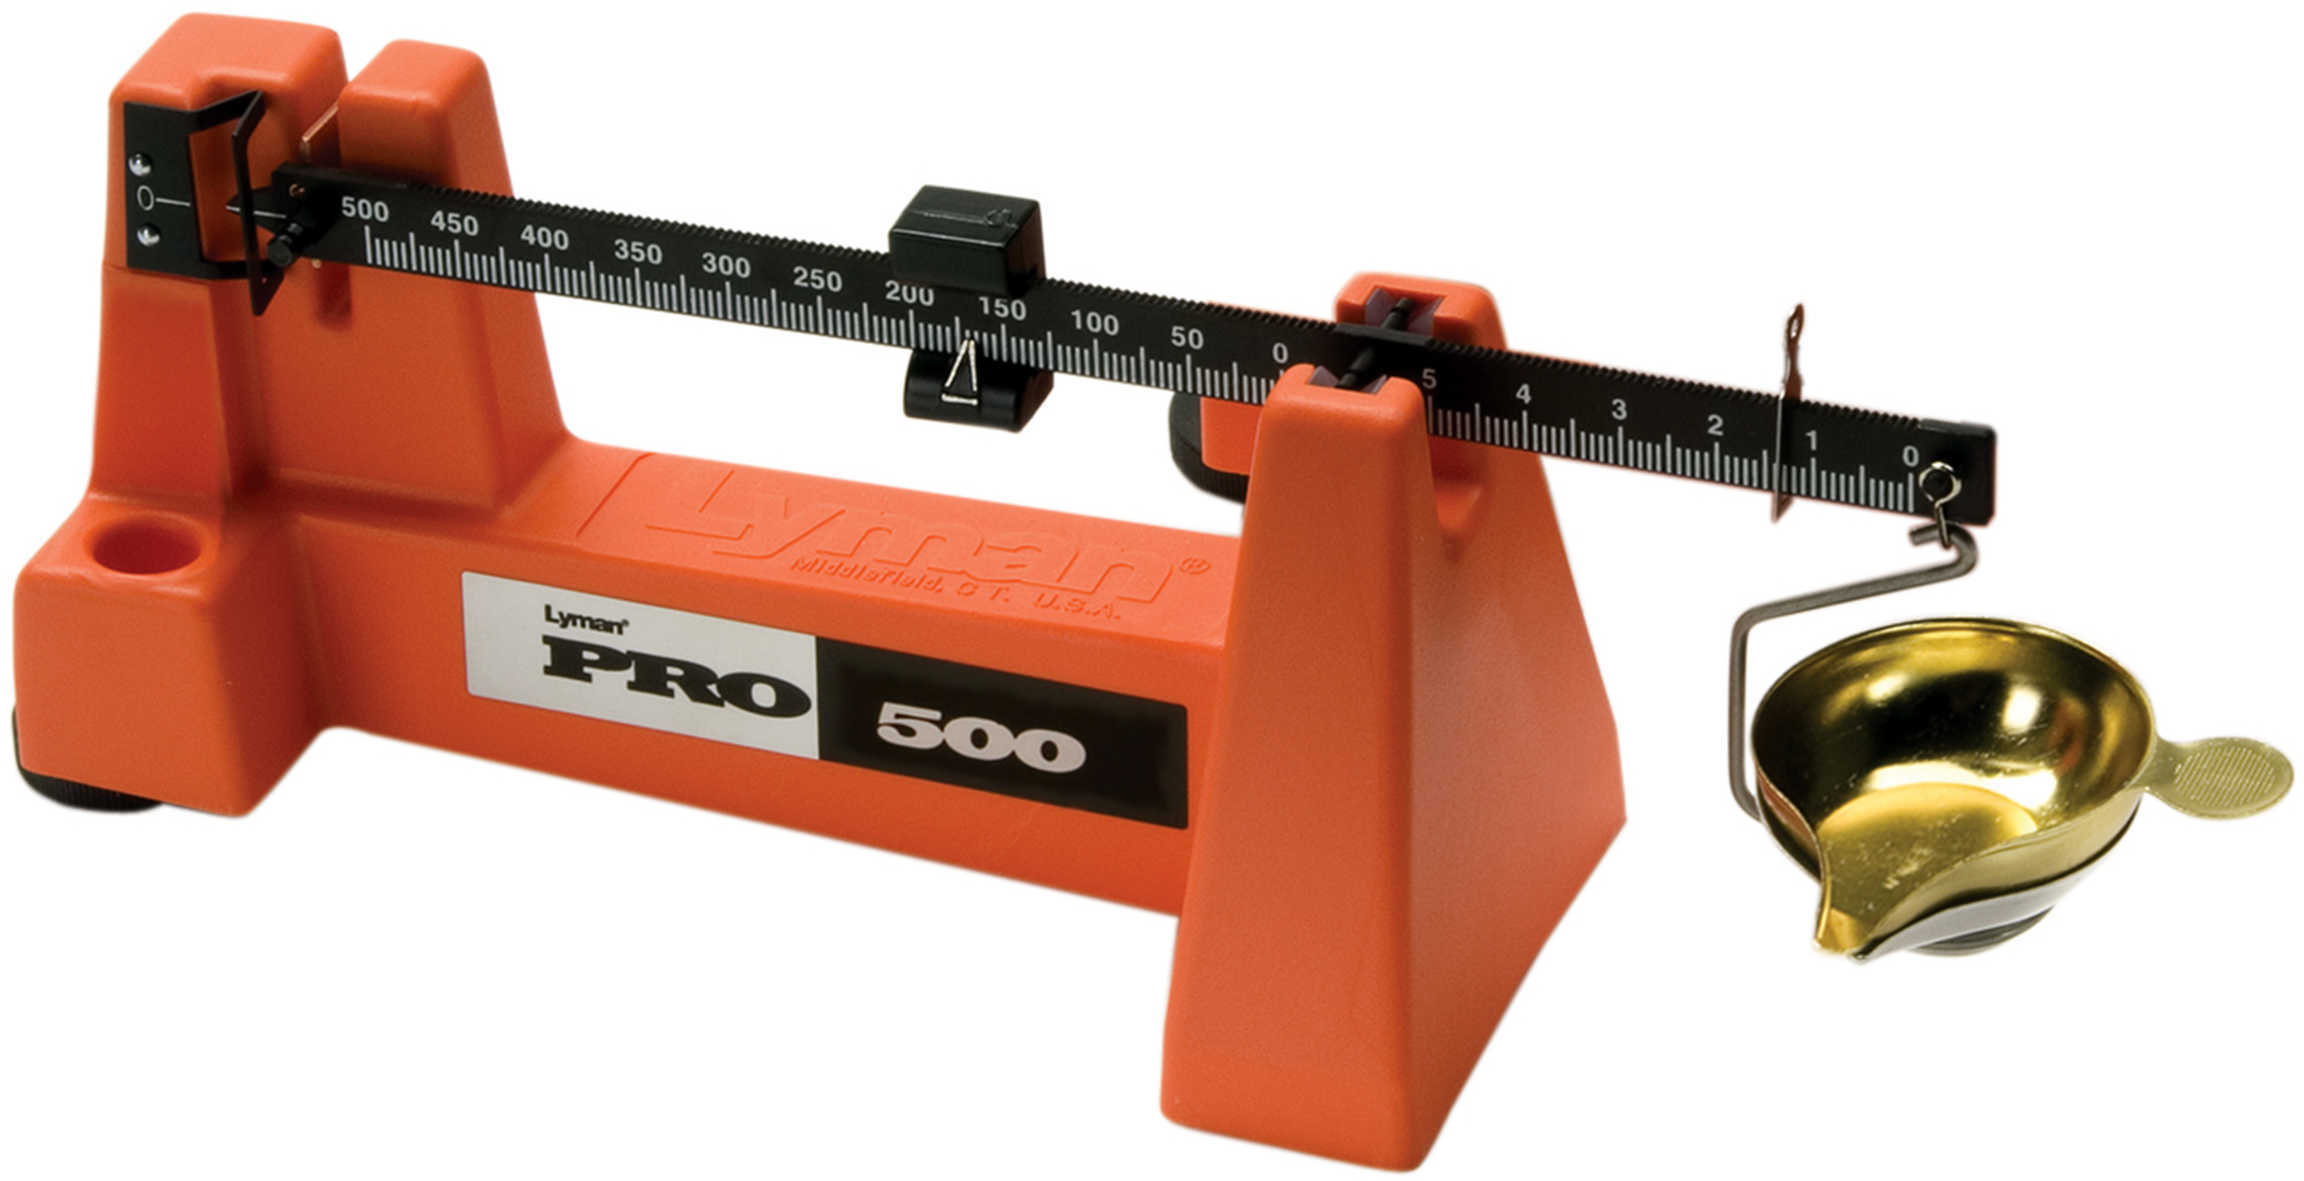 Lyman Pro 500 Scale